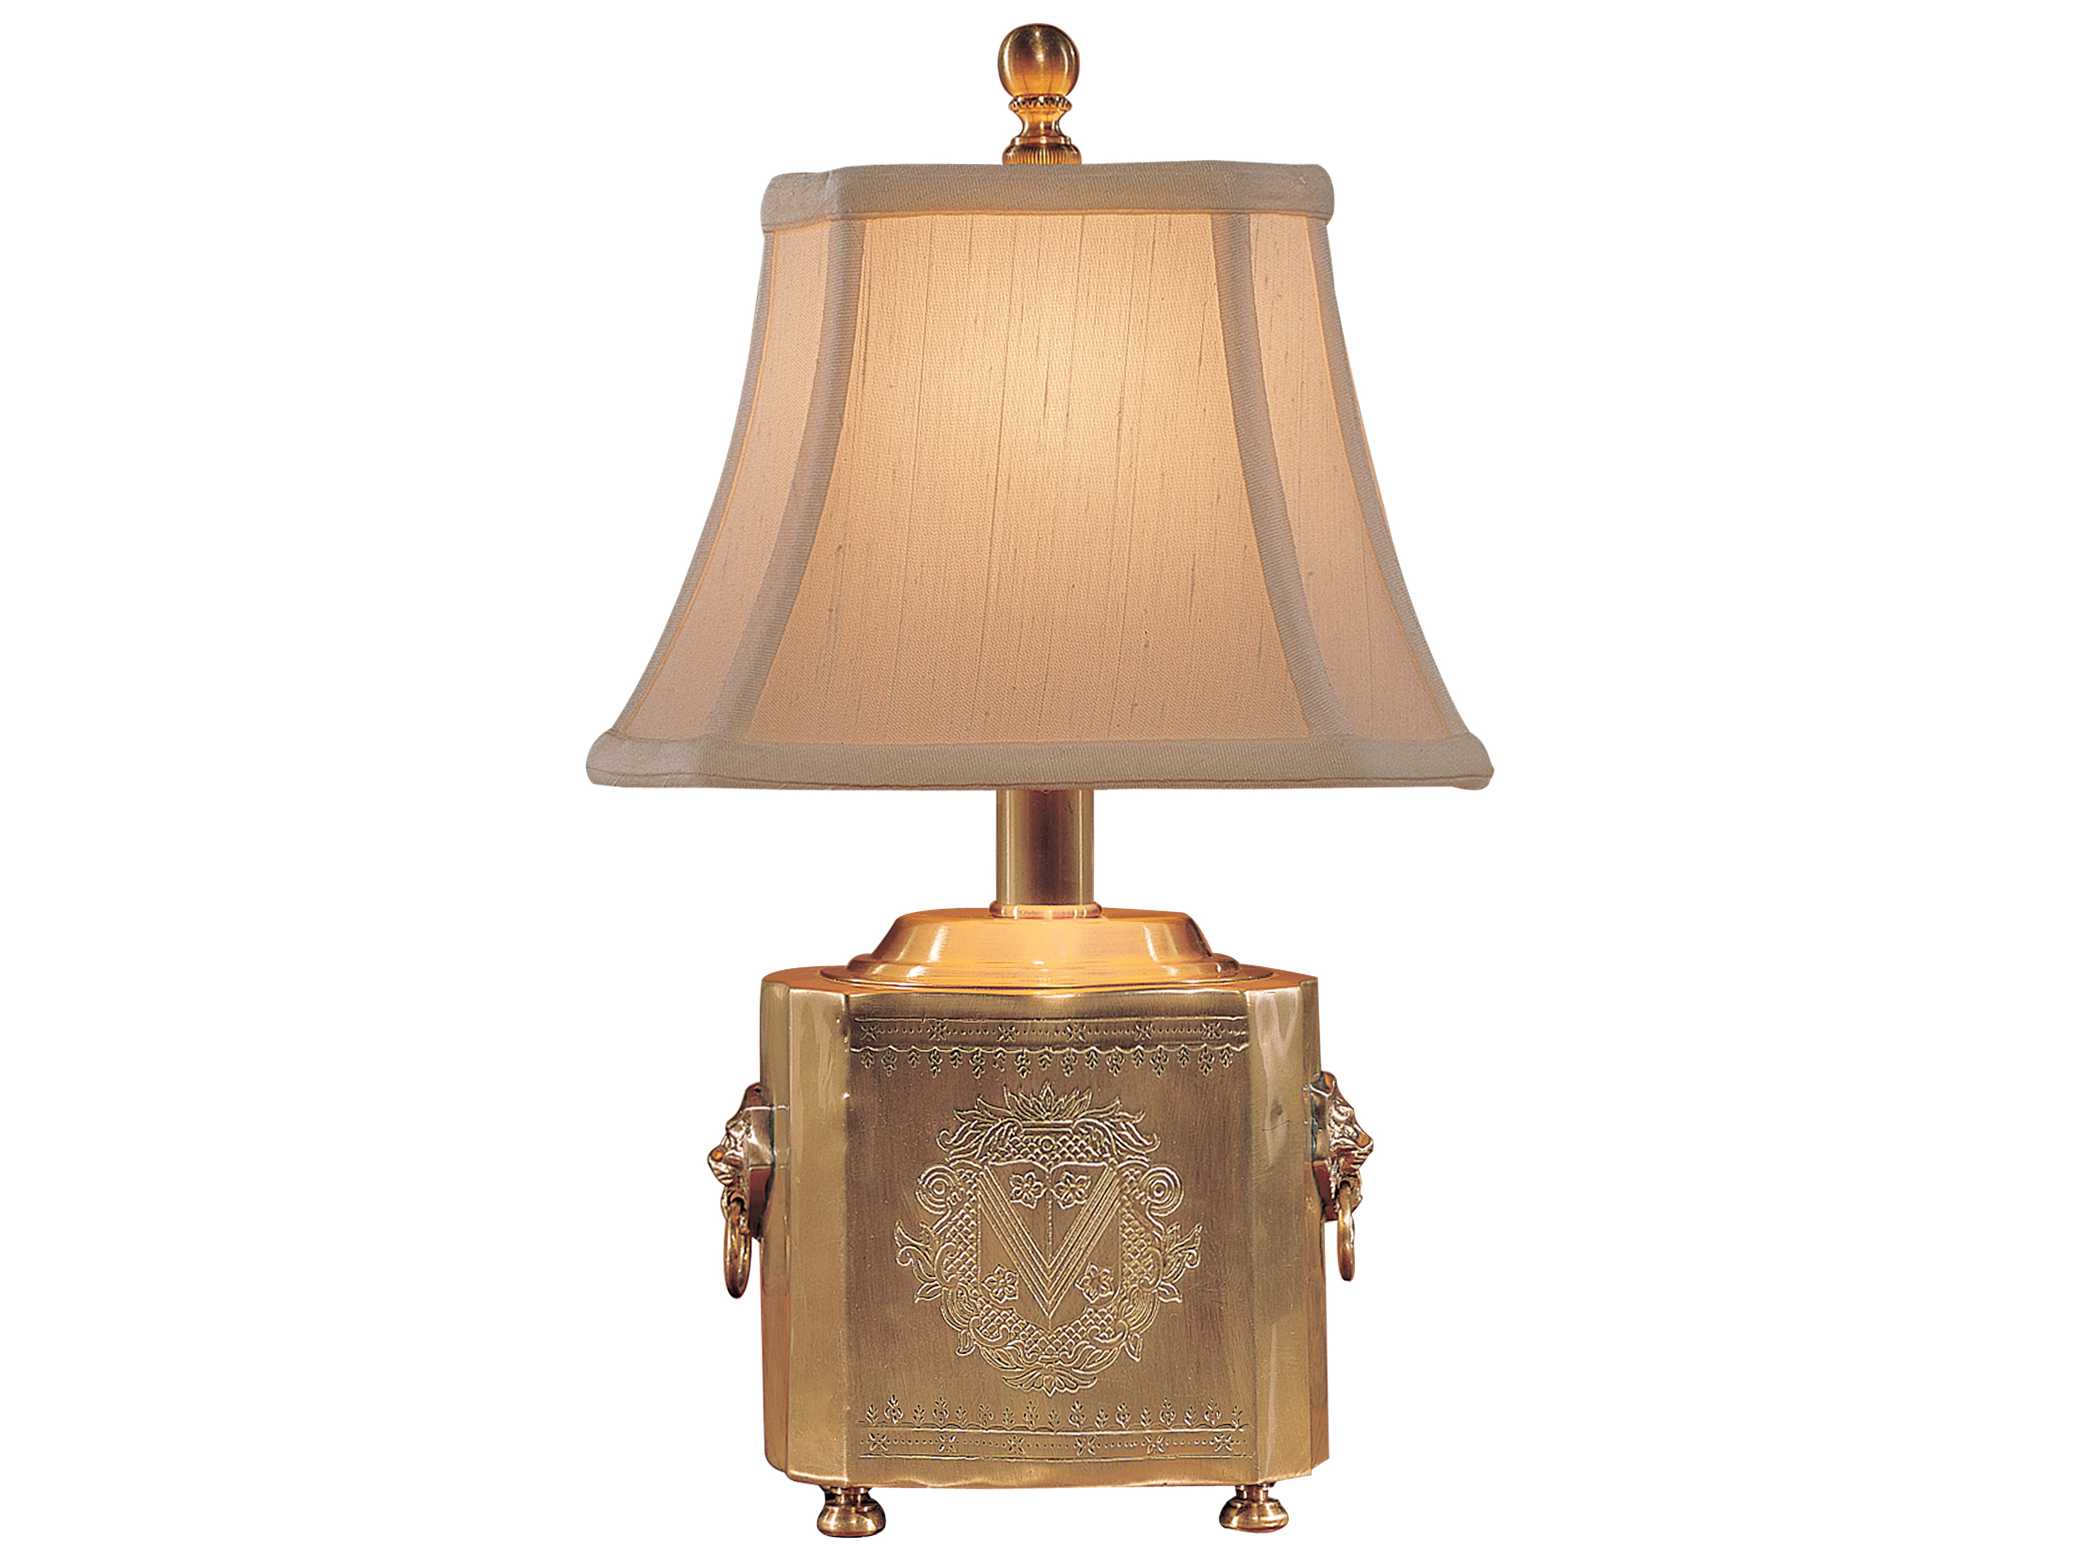 https://imgdataserver.com/items/wildwood-table-lamps-lamp-wl789_zm.jpg